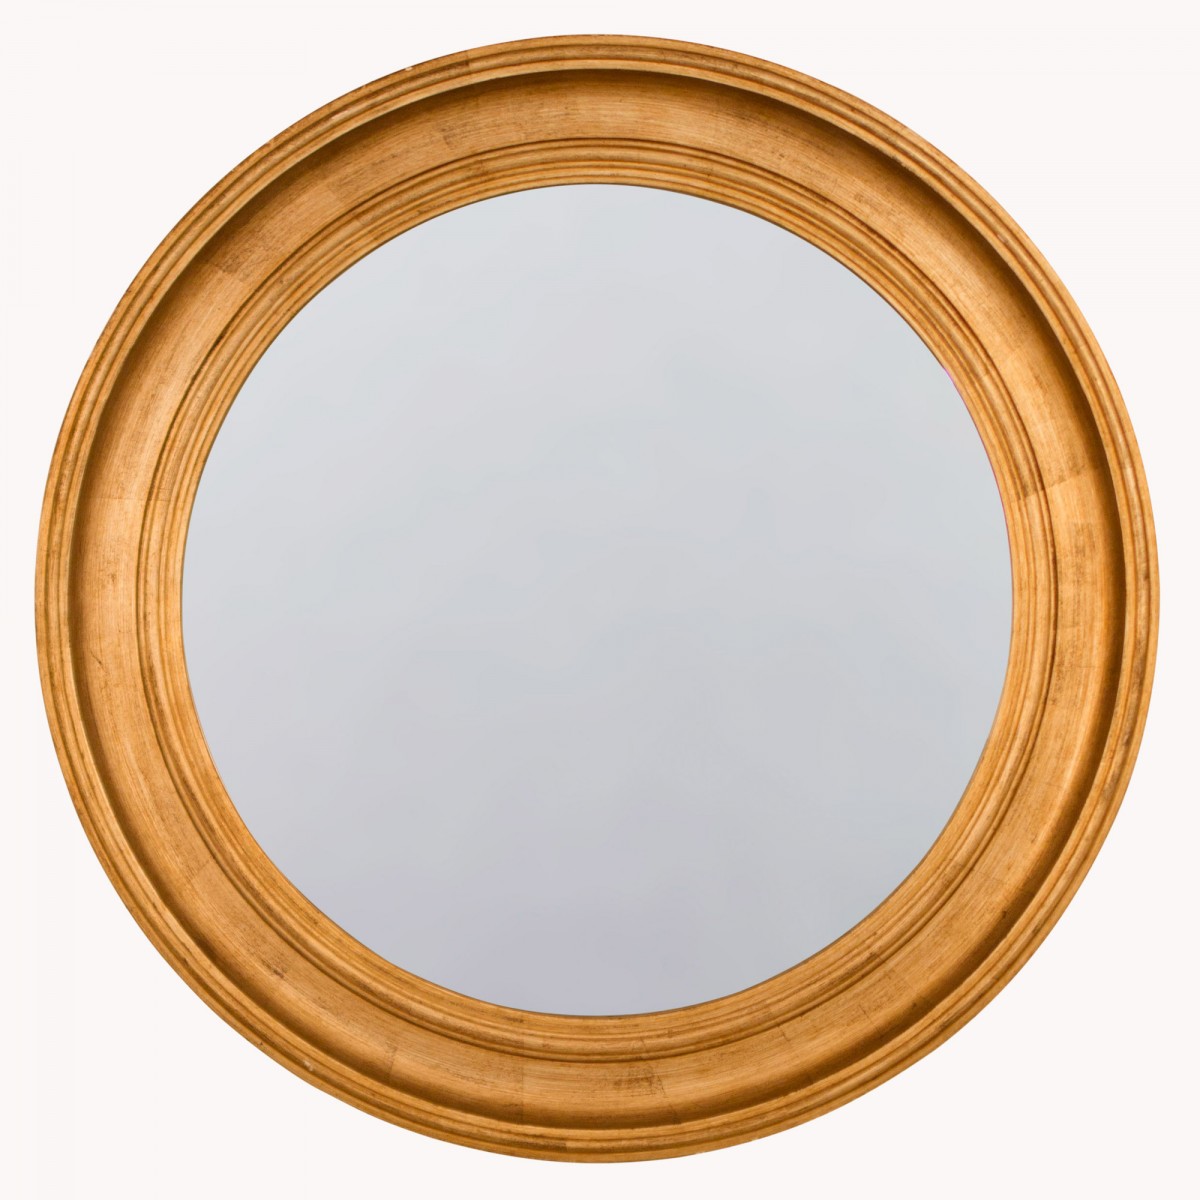 Round Gold Mirror: Stylish Reflection Of Elegance